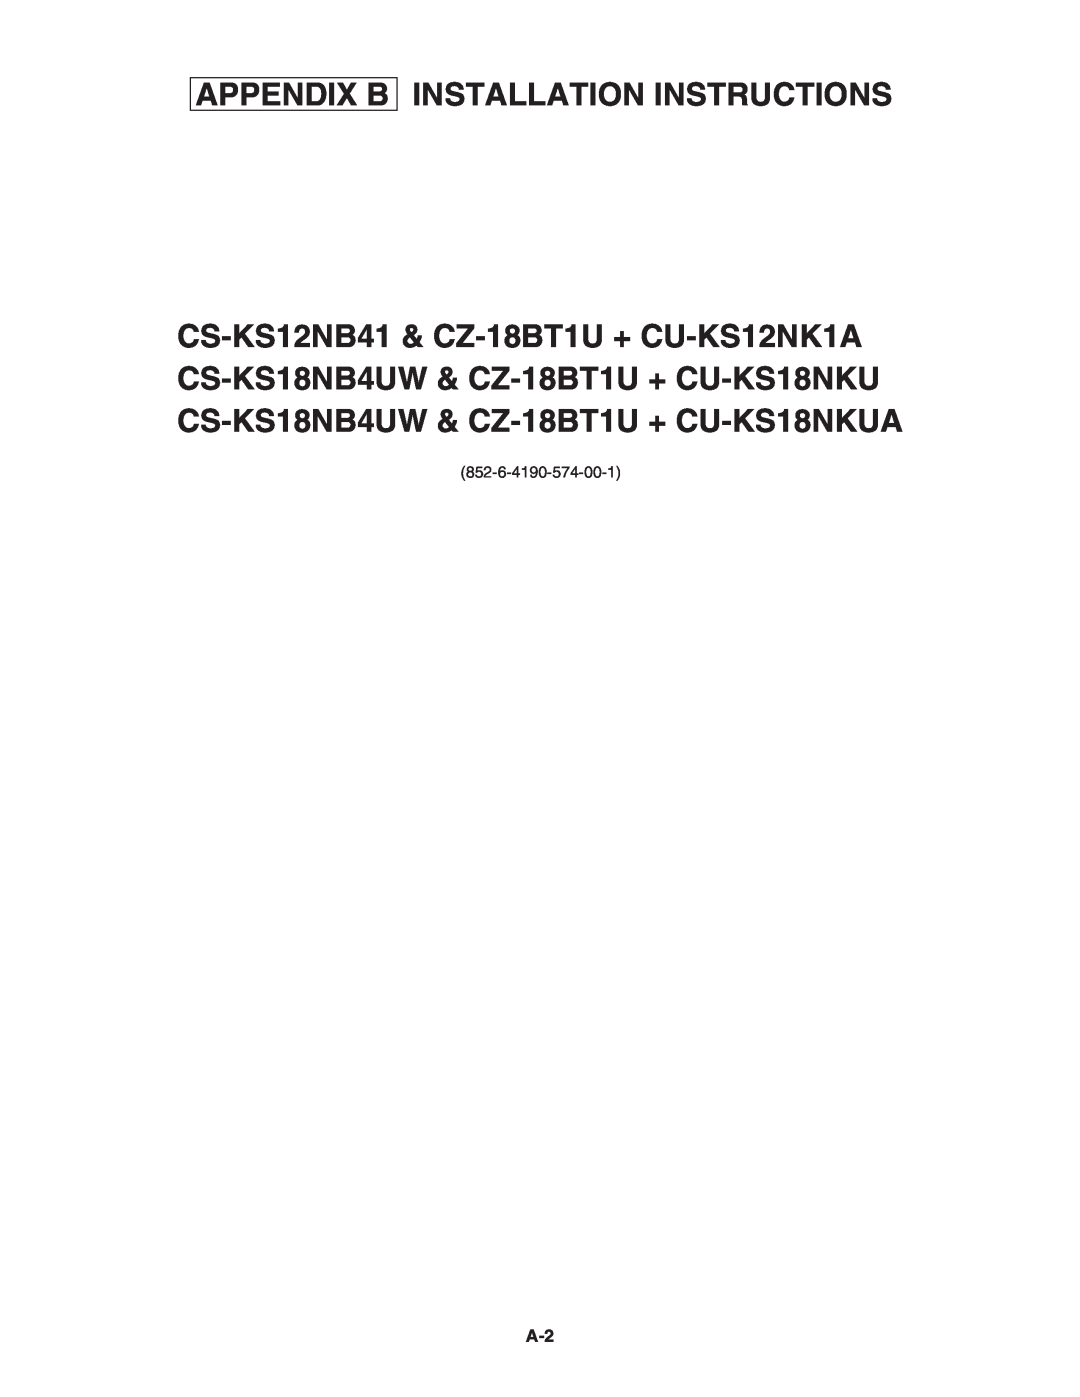 Panasonic CU-KS18NKUA, CU-KS12NK1A, CS-KS12NB41 & CZ-18BT1U, CS-KS18B4UW & CZ-18BT1U Appendix B, Installation Instructions 